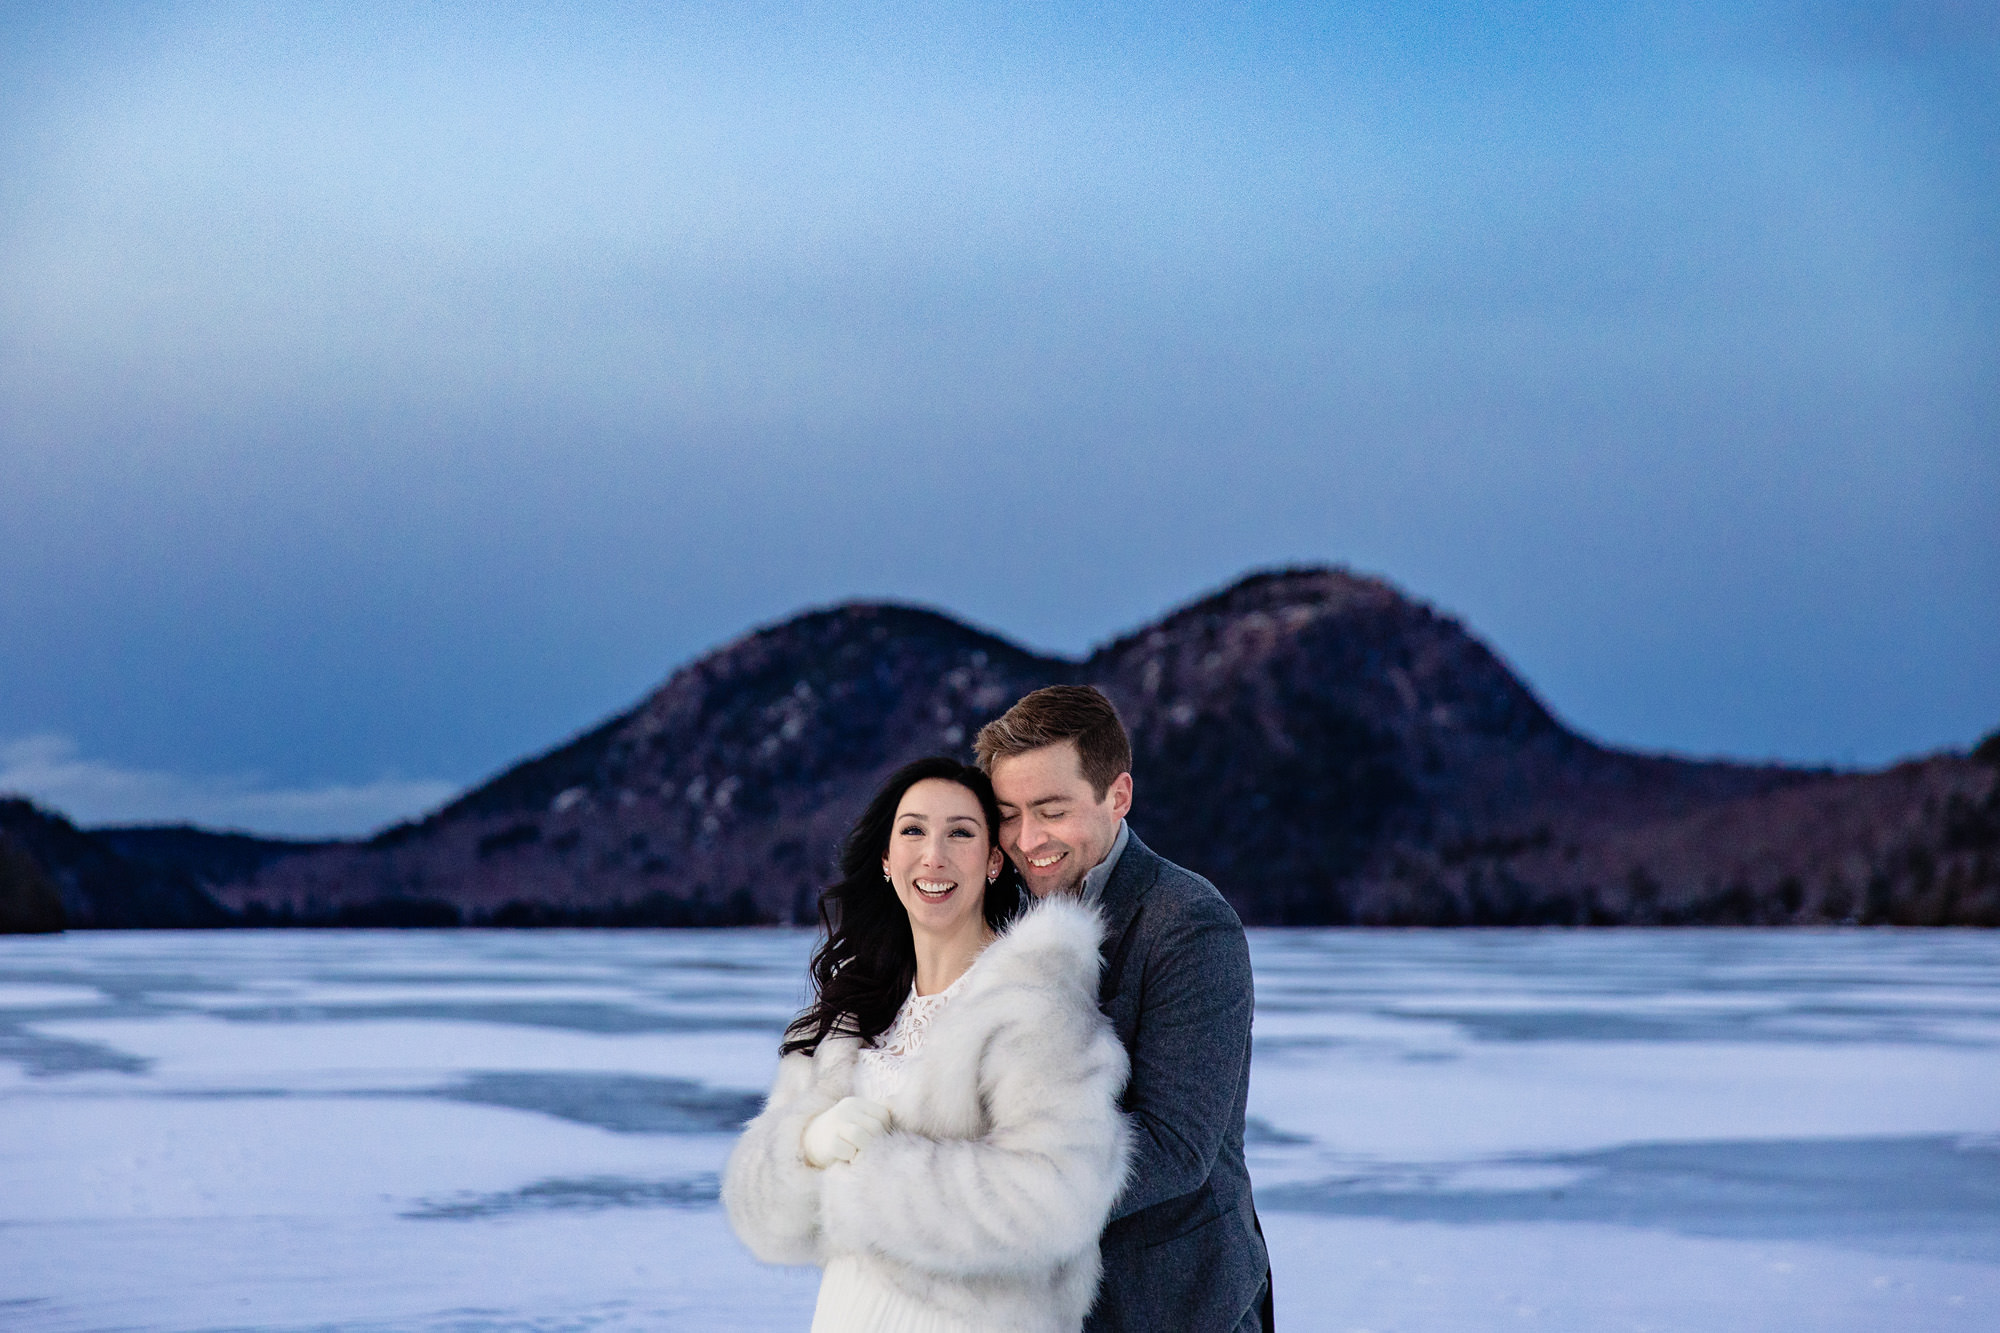 An elopement portrait taken during winter at Jordan Pond at Acadia National Park.